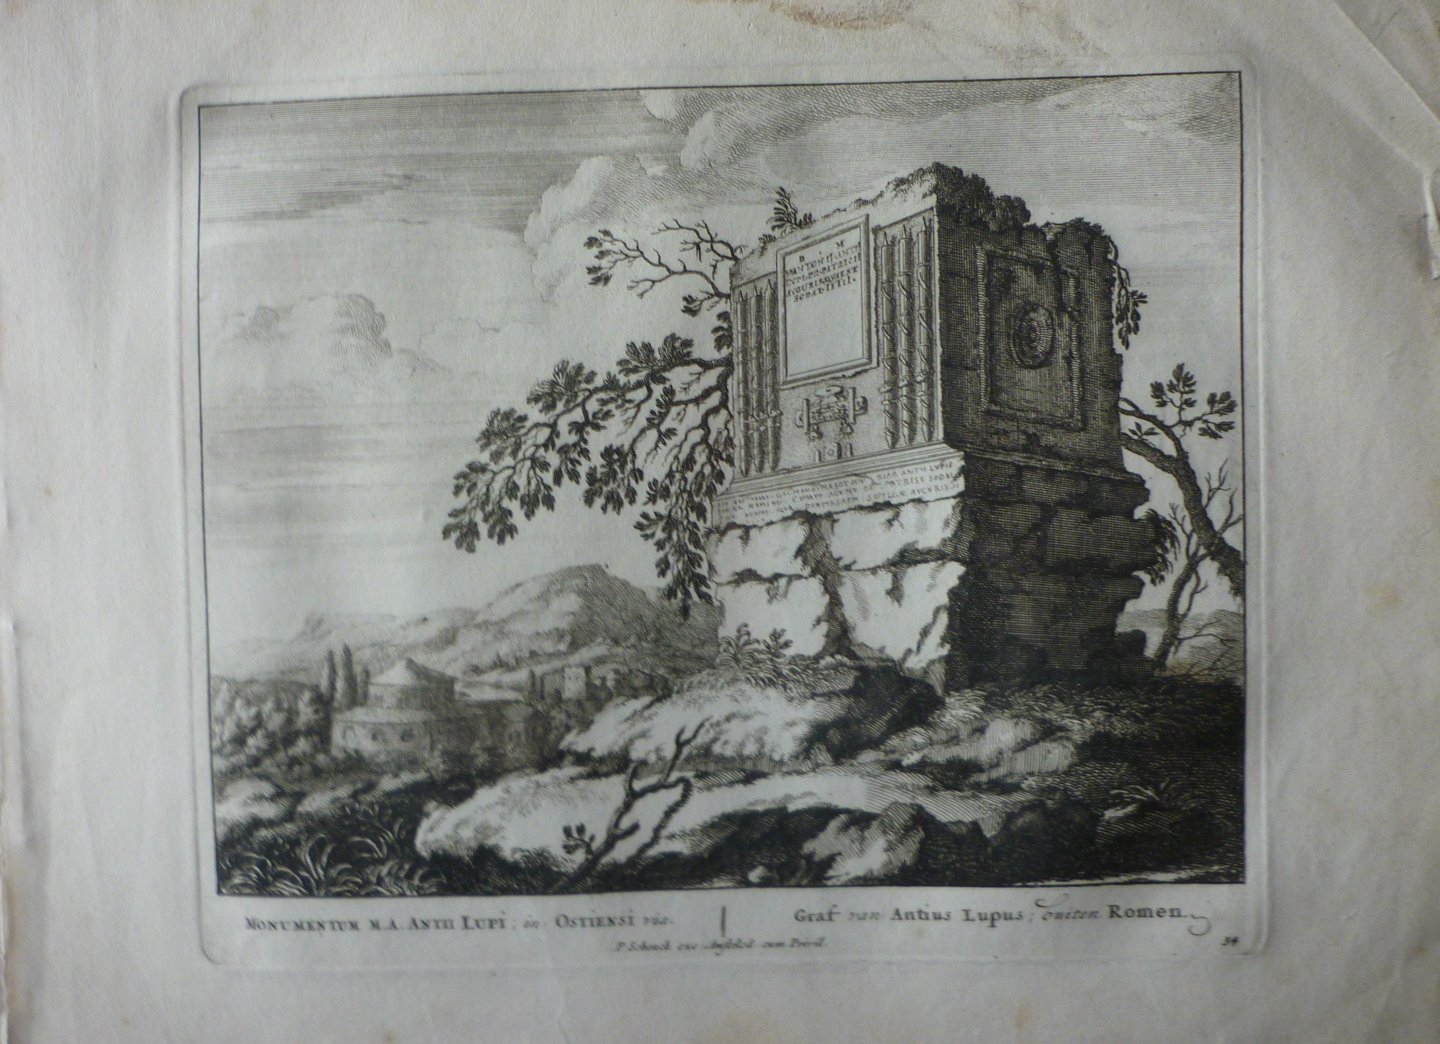 Schenck, Petrus [Pieter Schenk] - Graf van Antius Lupus, buiten Romen 54. Originele kopergravure.